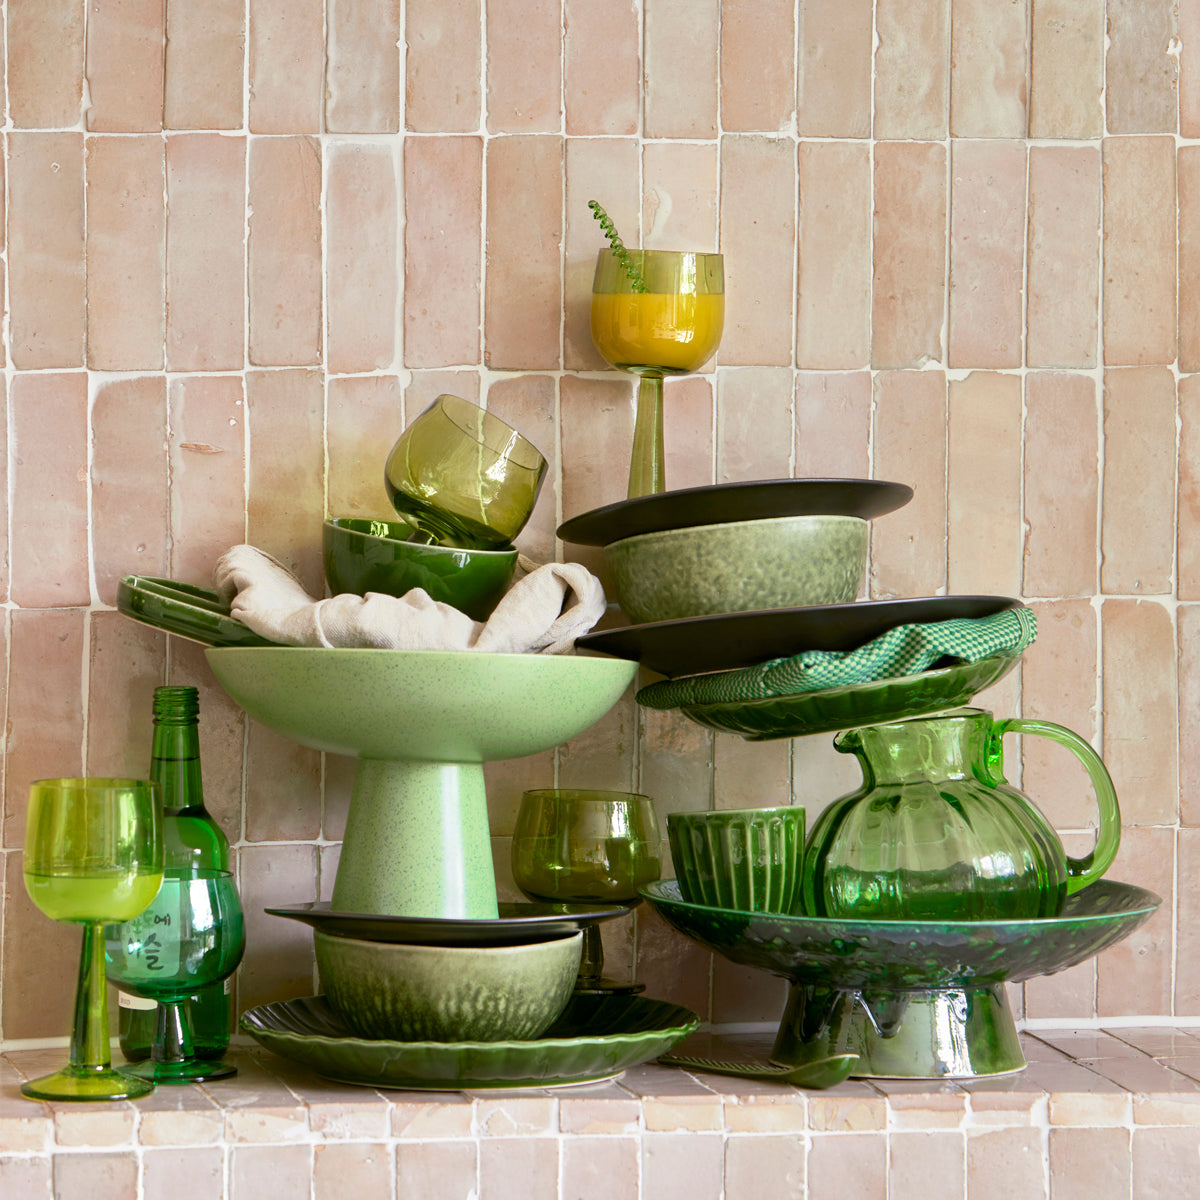 The Emeralds Ceramic Bowl Organic Green (Set of 2)